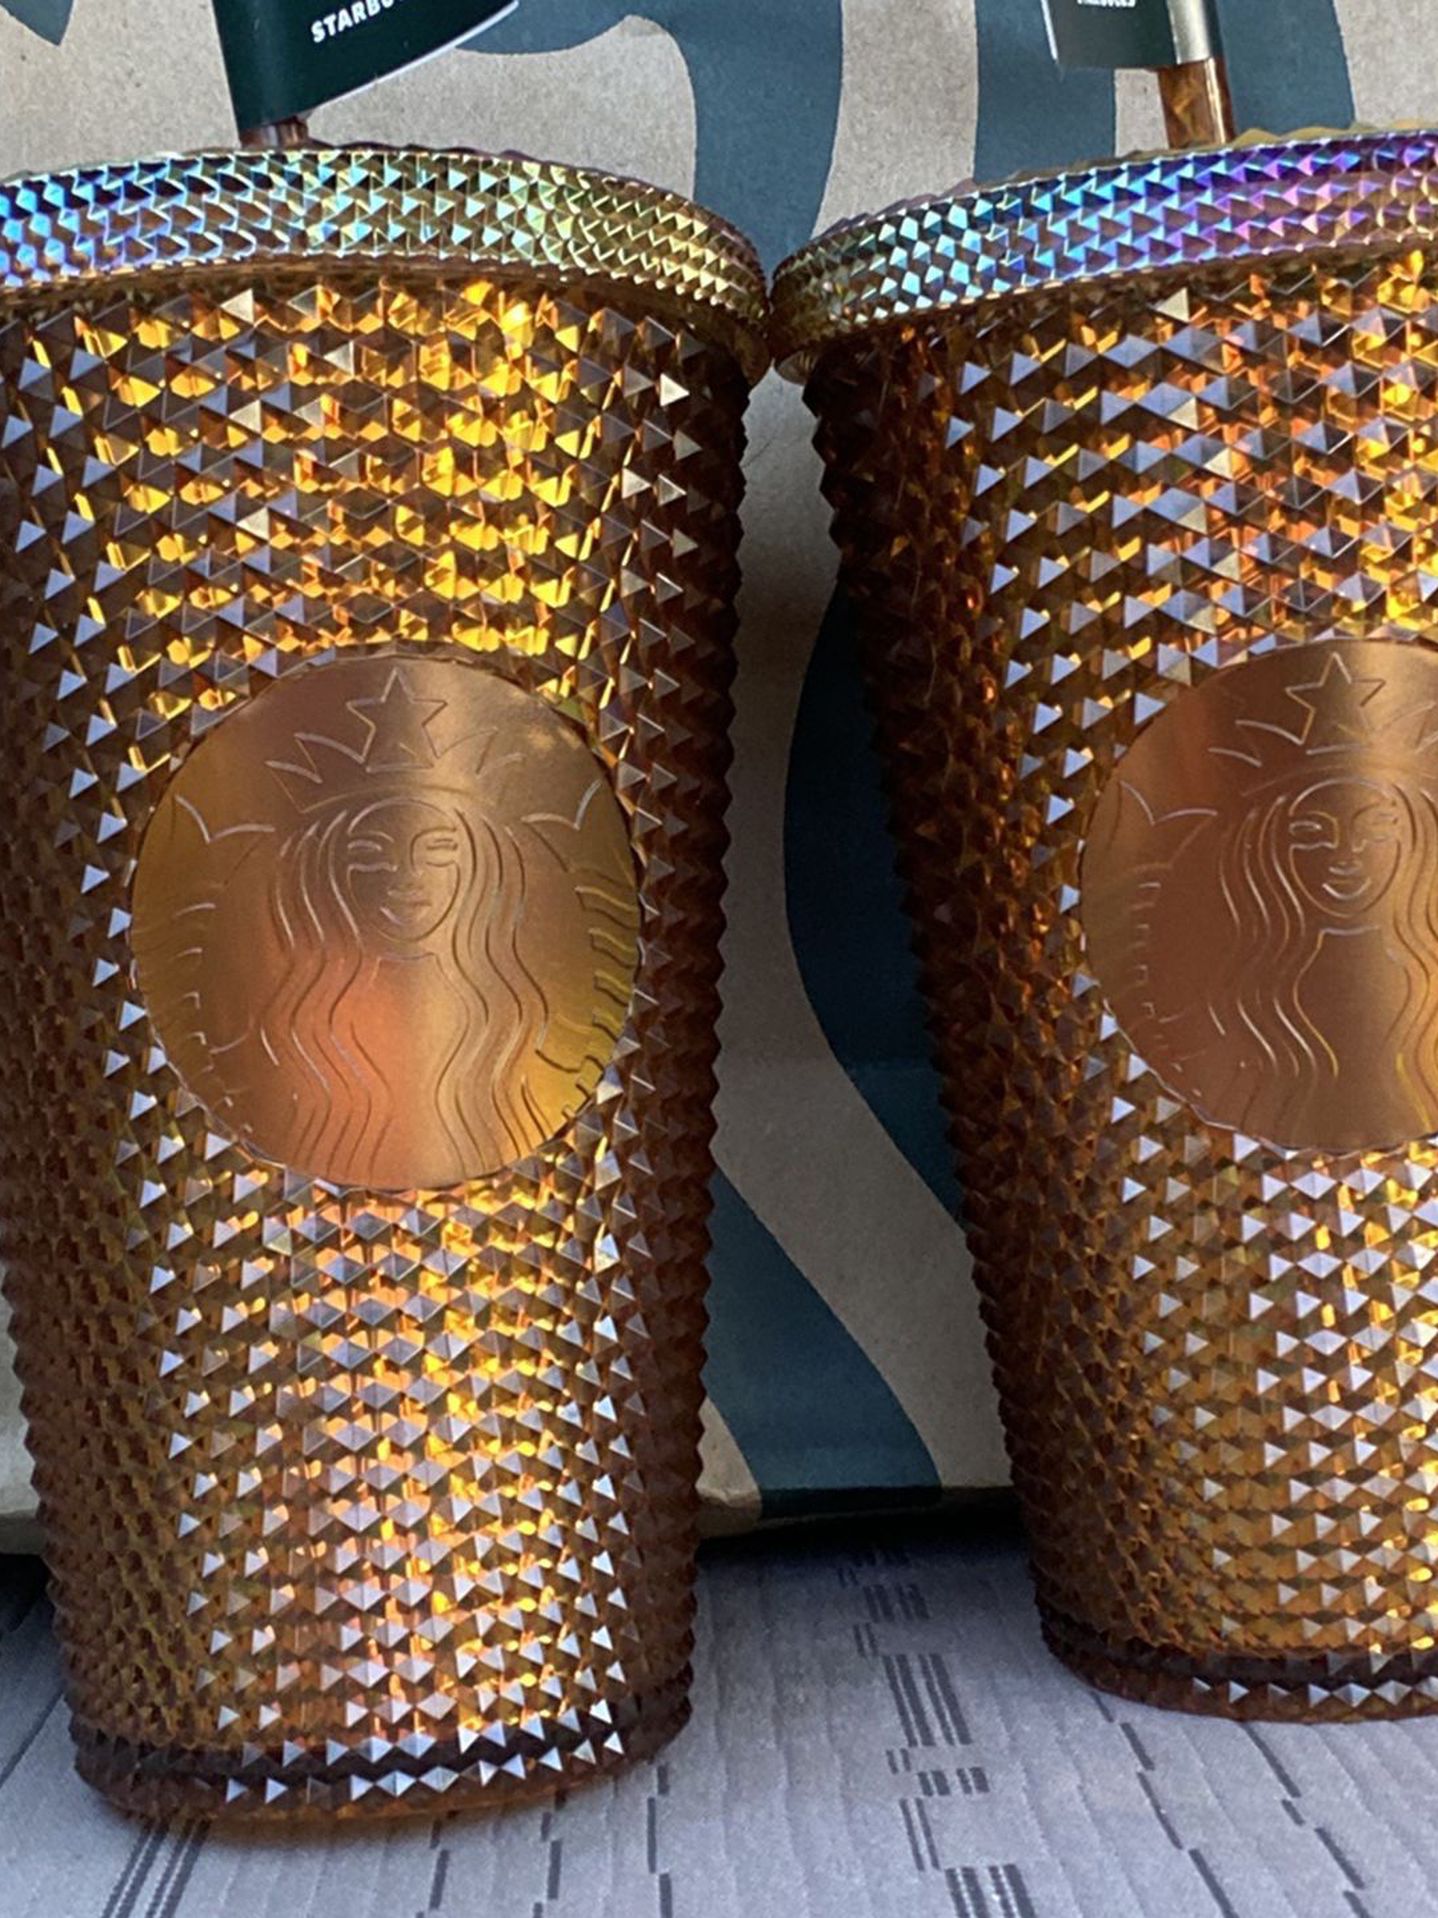 Grande Honeycomb Studded Starbucks Cup